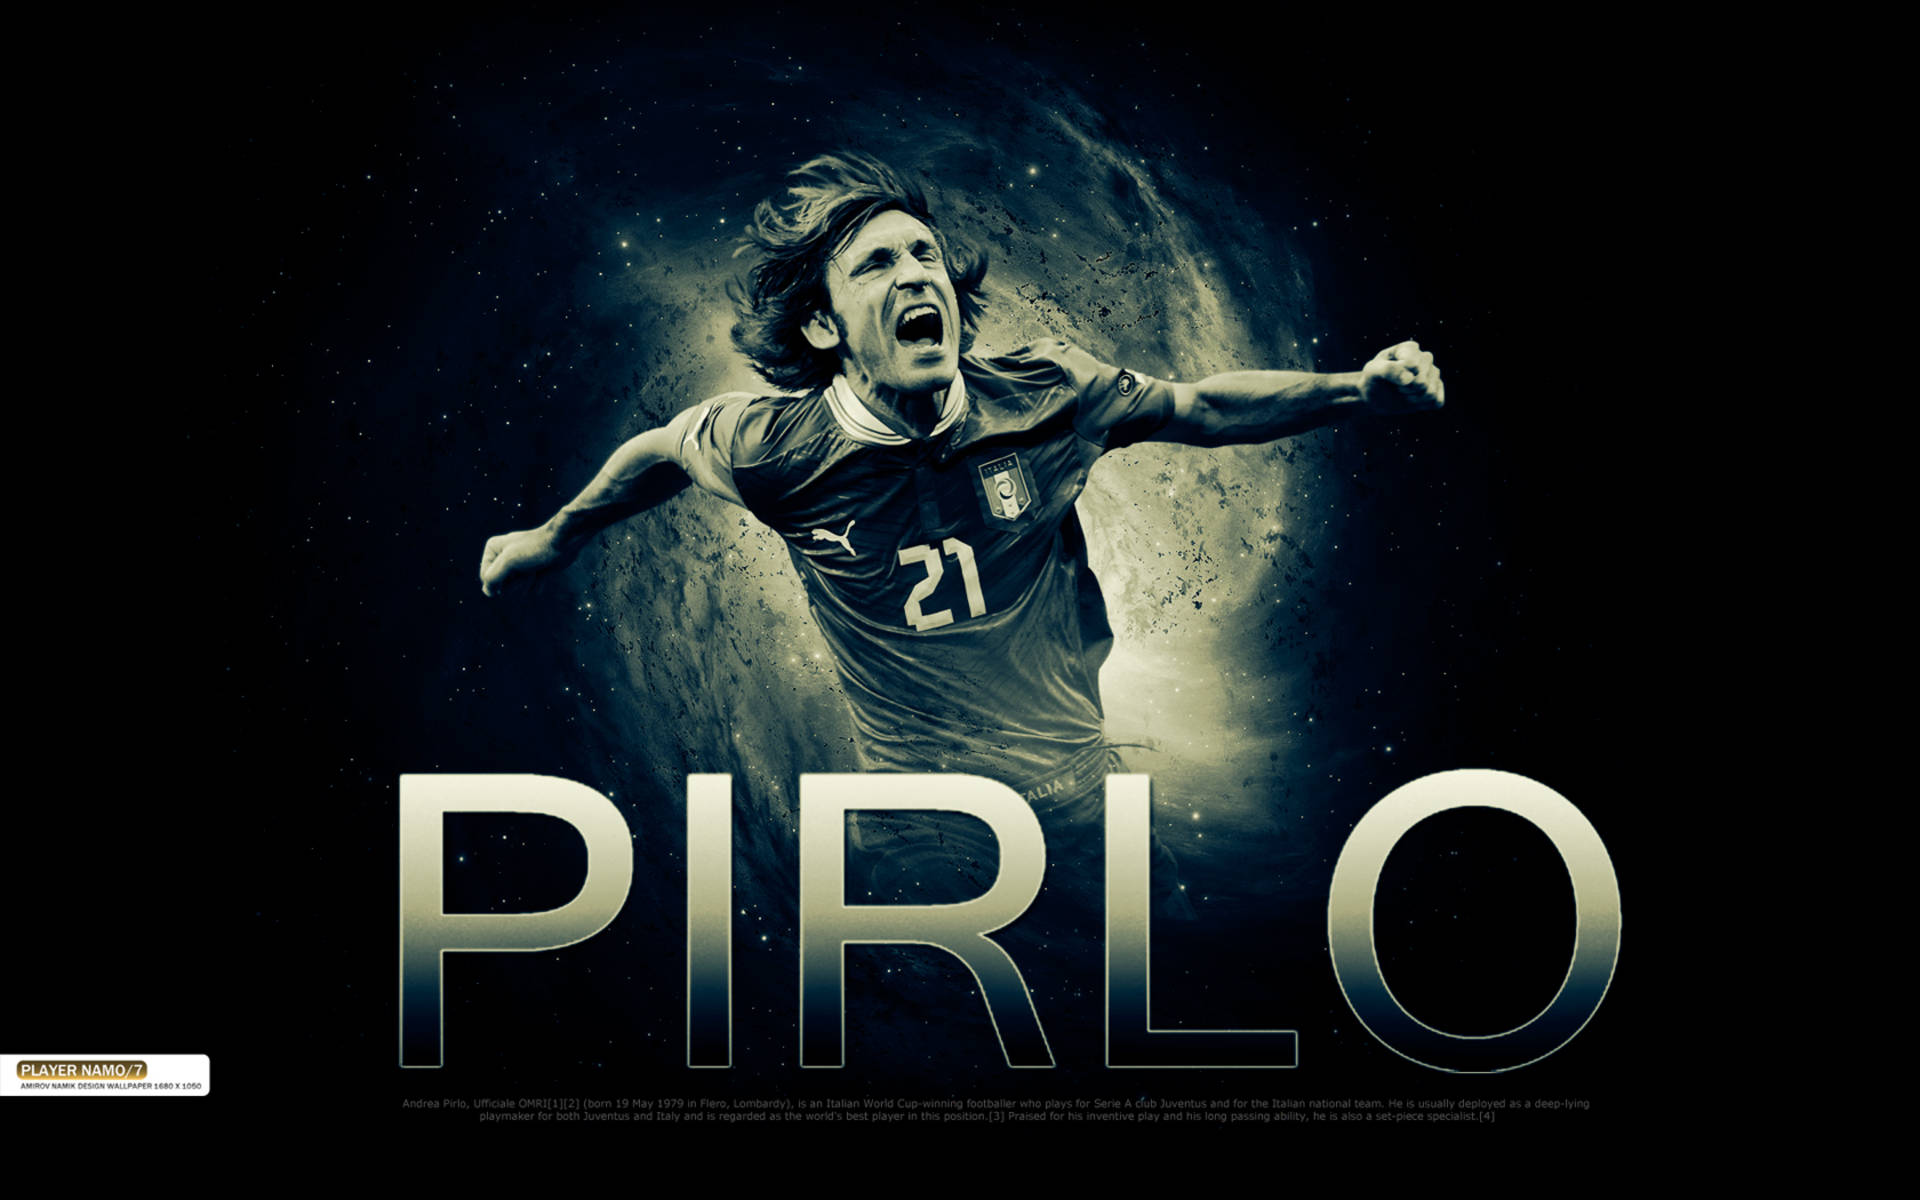 Andrea Pirlo - Galaxy Art Captivating Soccer Inspiration Background